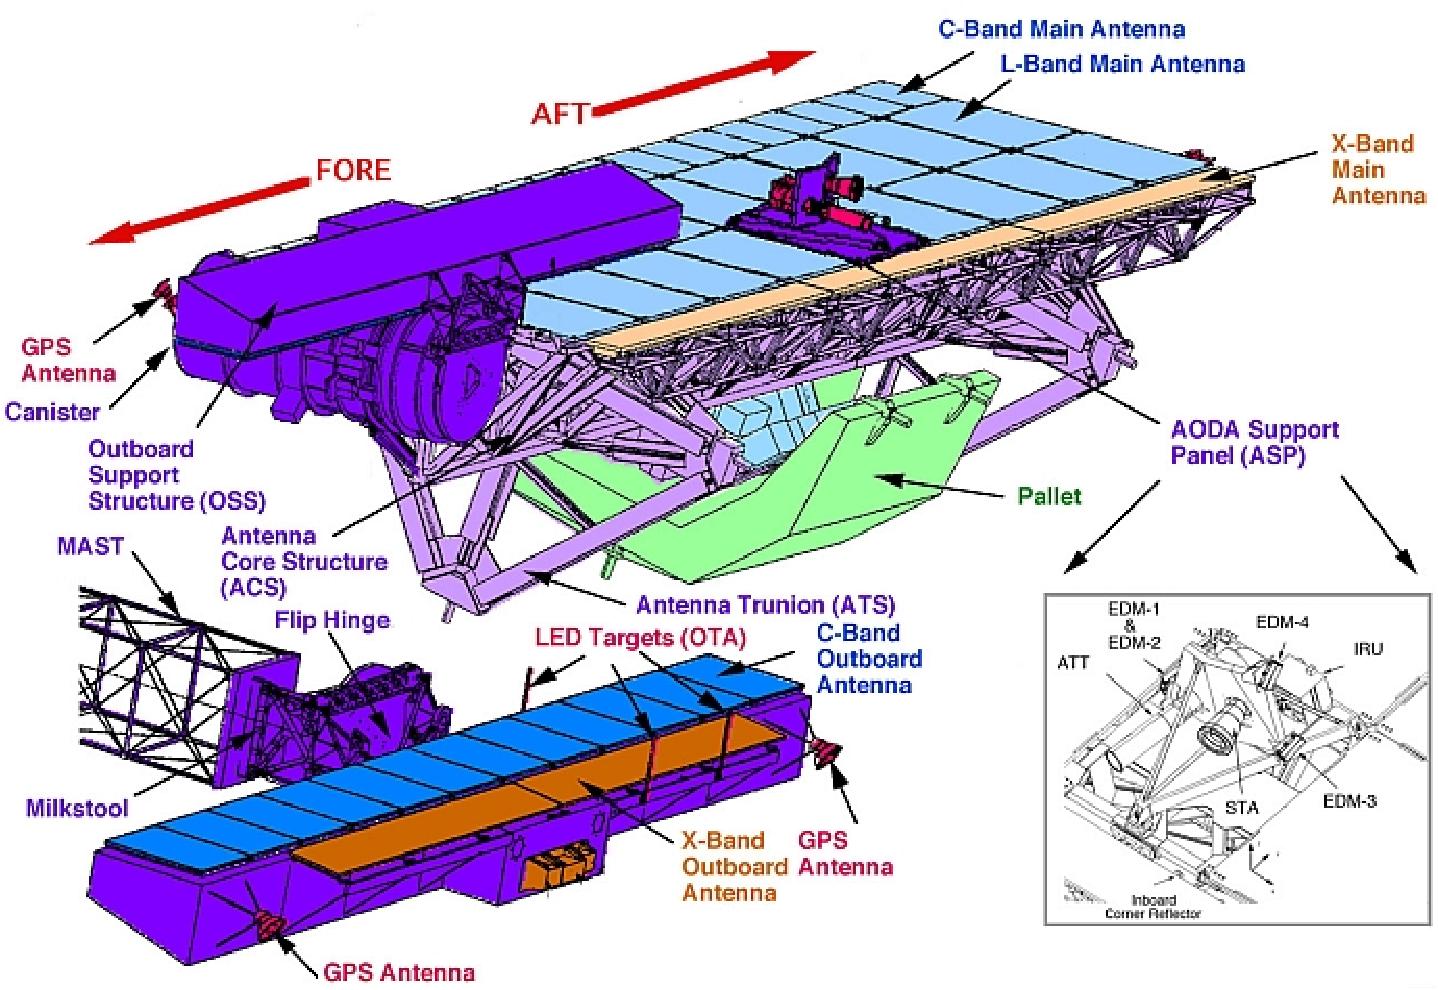 Figure 3: System architecture of AODA (image credit: NASA/JPL)